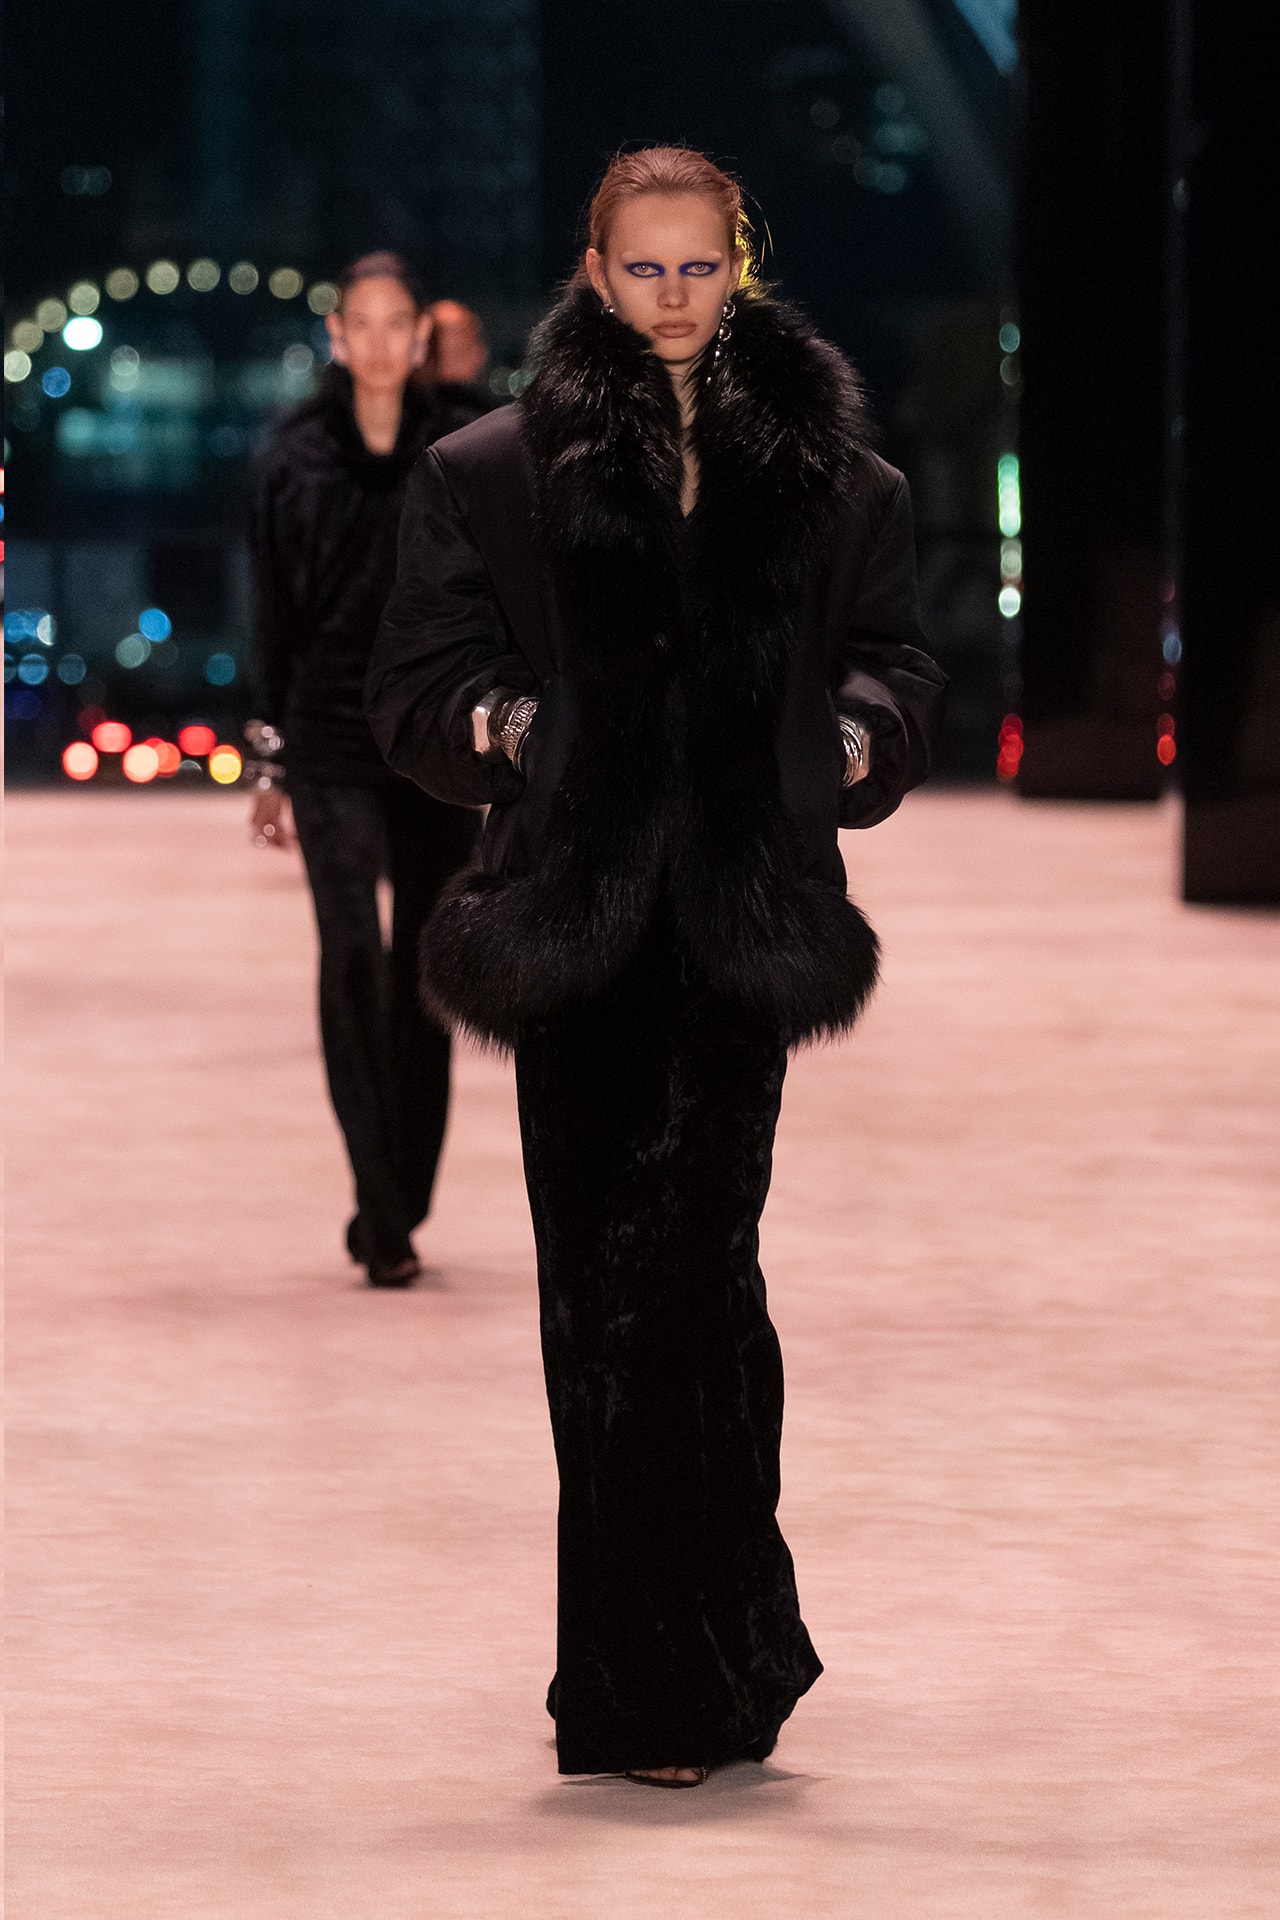 Yves Saint Laurent Fur Coat